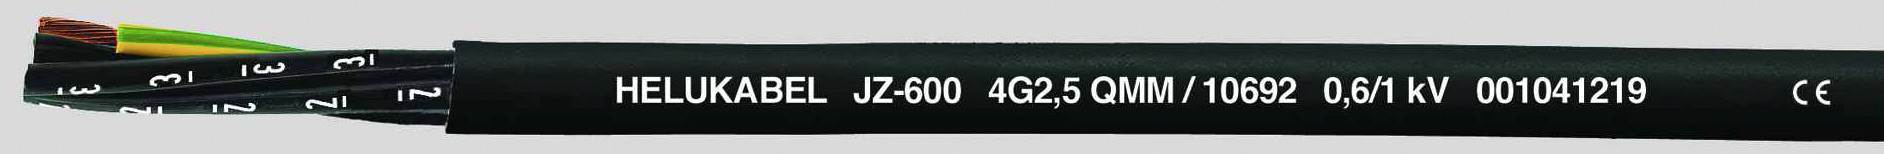 HELUKABEL JZ-600 Steuerleitung 8 G 1 mm² Schwarz 10626-1000 1000 m